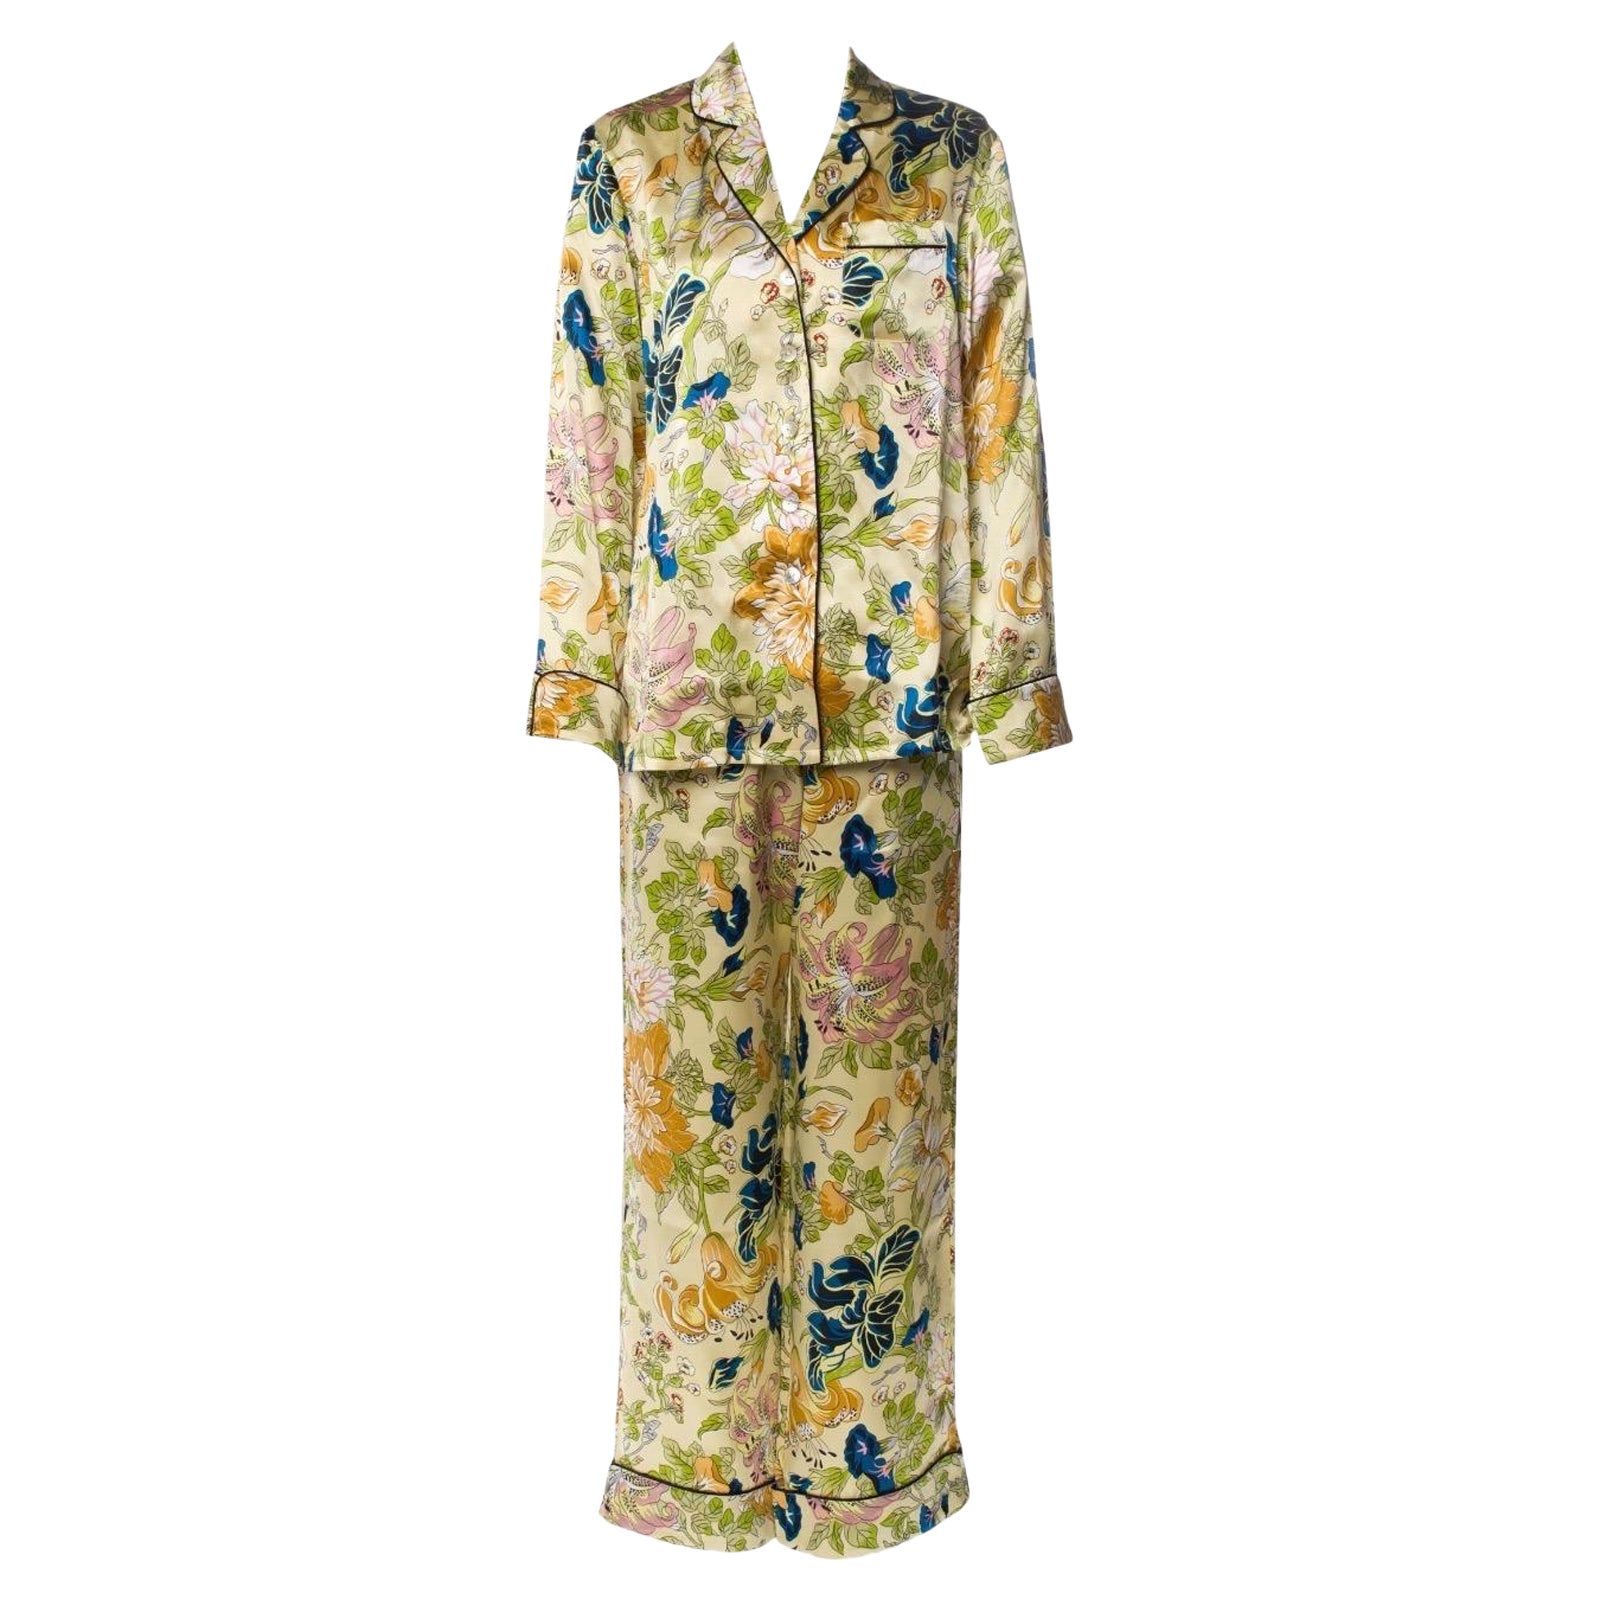 NEW Olivia Von Halle Silk Floral Print Pajamas Lounge Home Sleep Wear Suit M For Sale